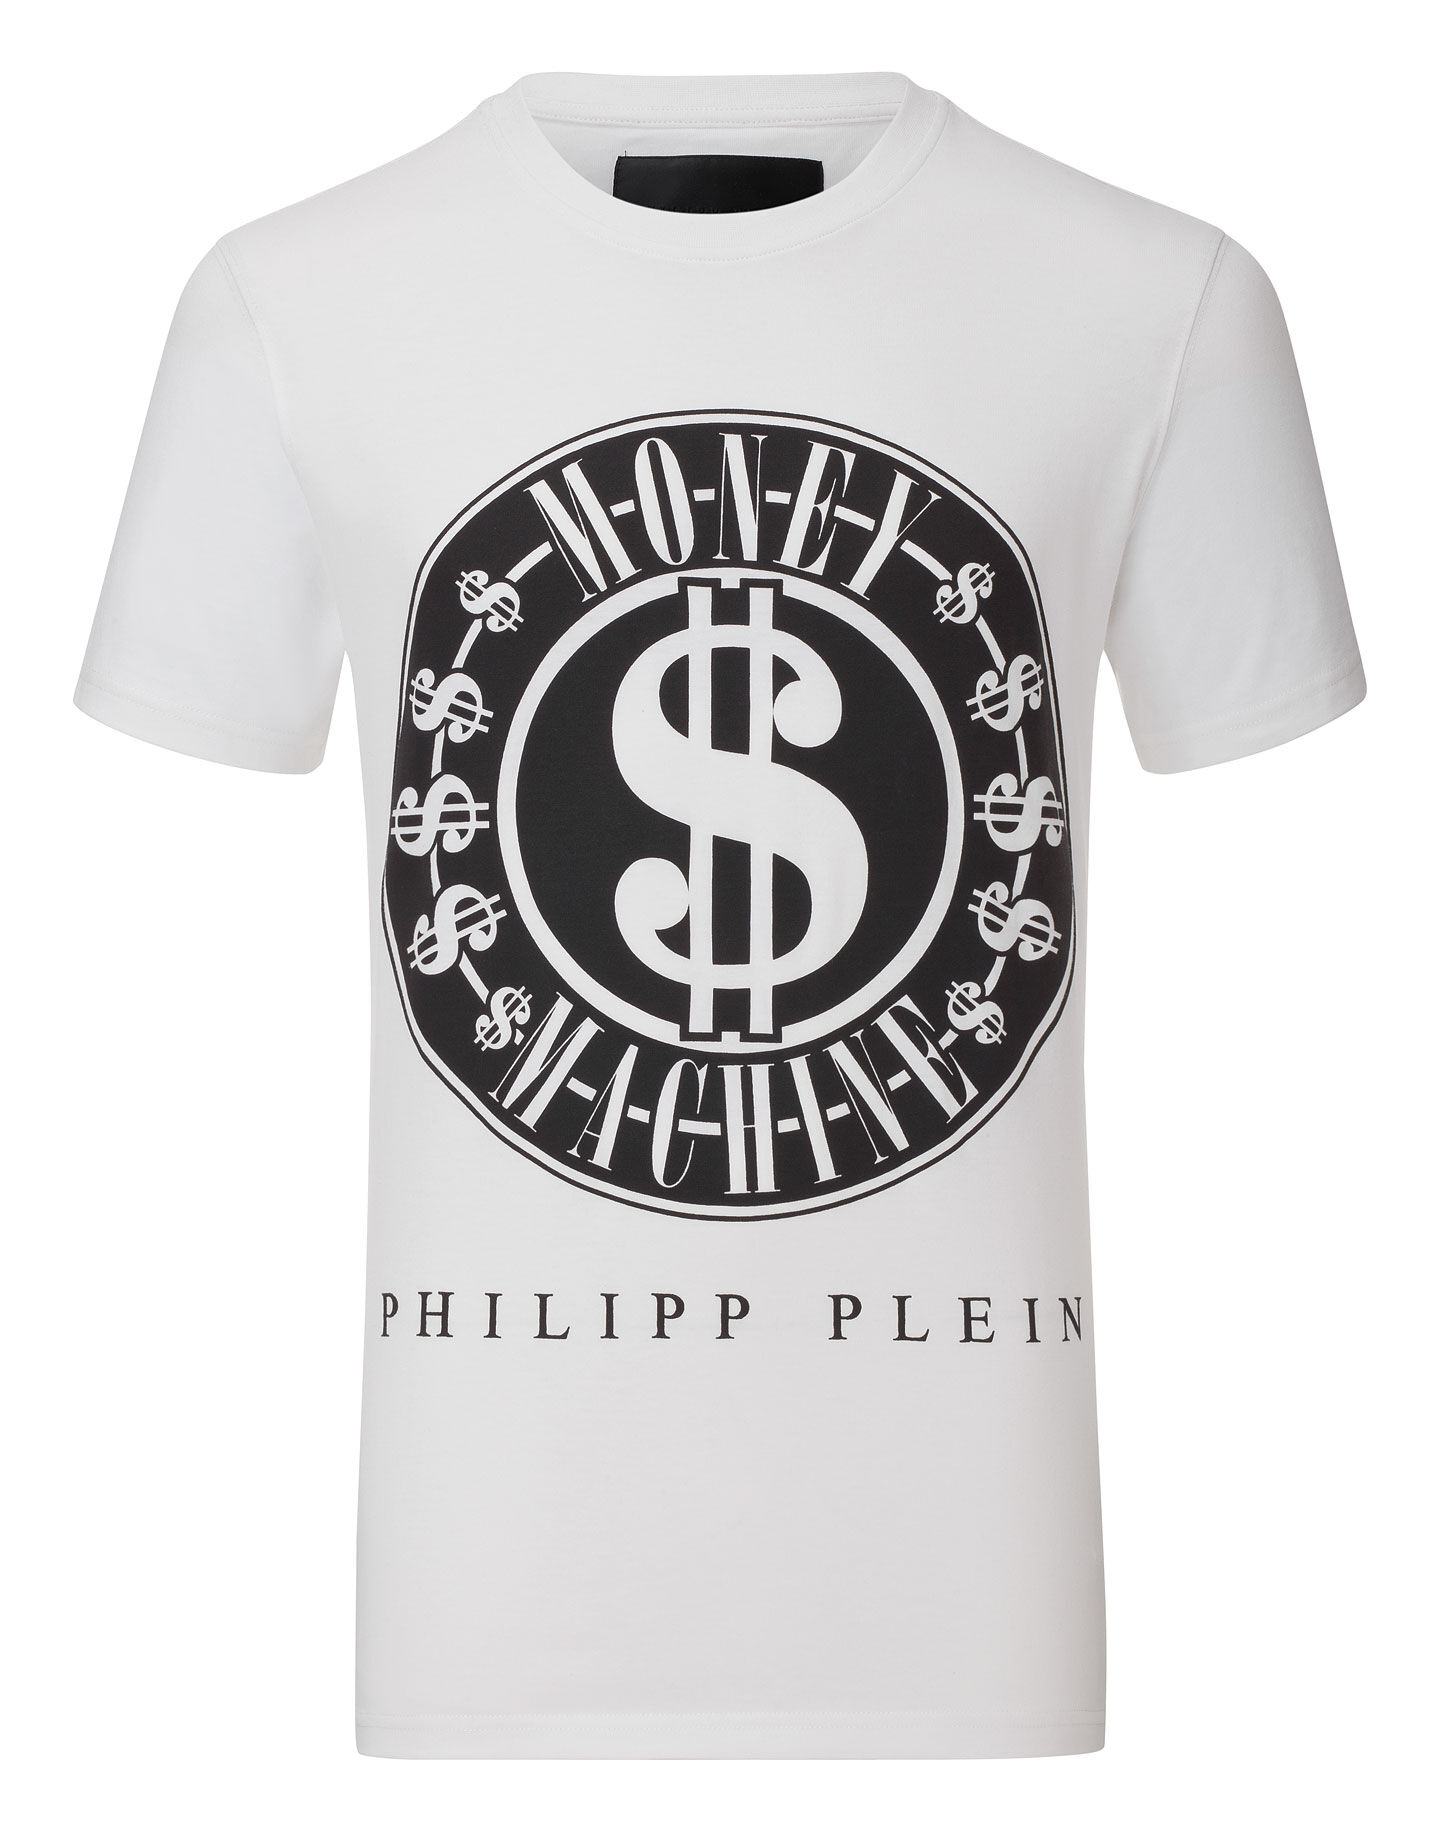 philipp plein t shirt money man